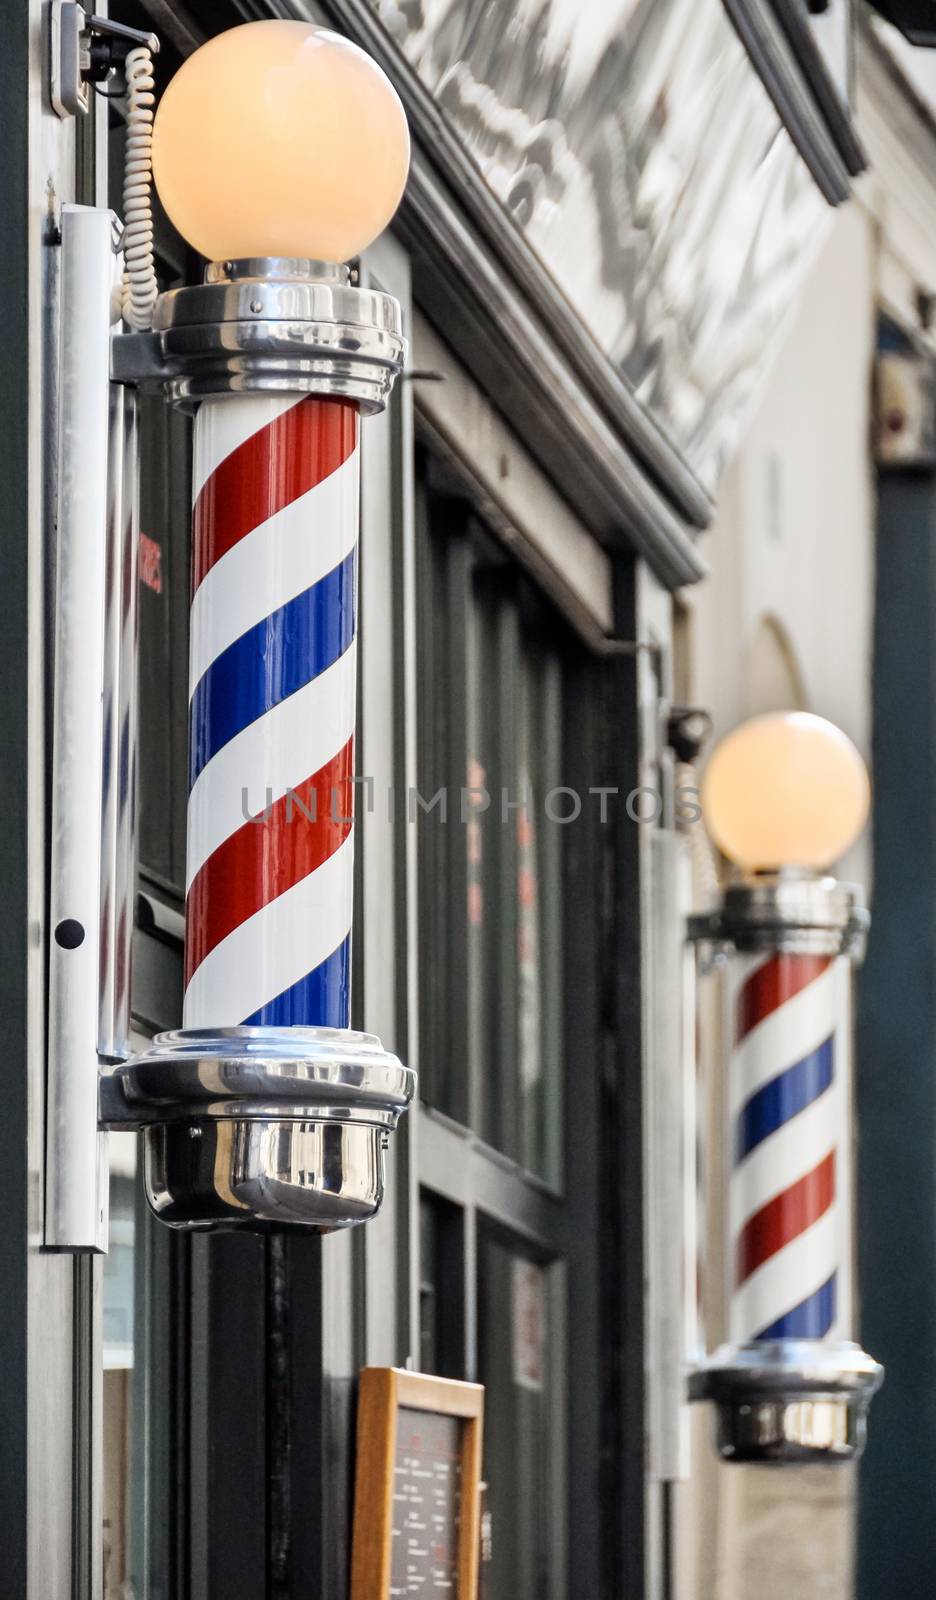 Barber shop sign in Paris by dutourdumonde